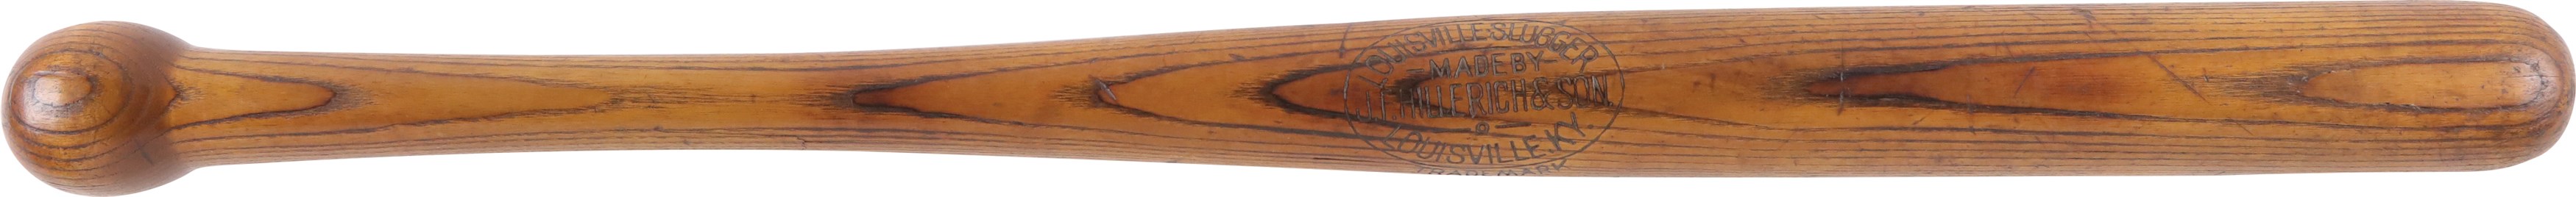 - Very Rare Early 1900s Hillerich & Bradsby "Ball Knob" Baseball Bat